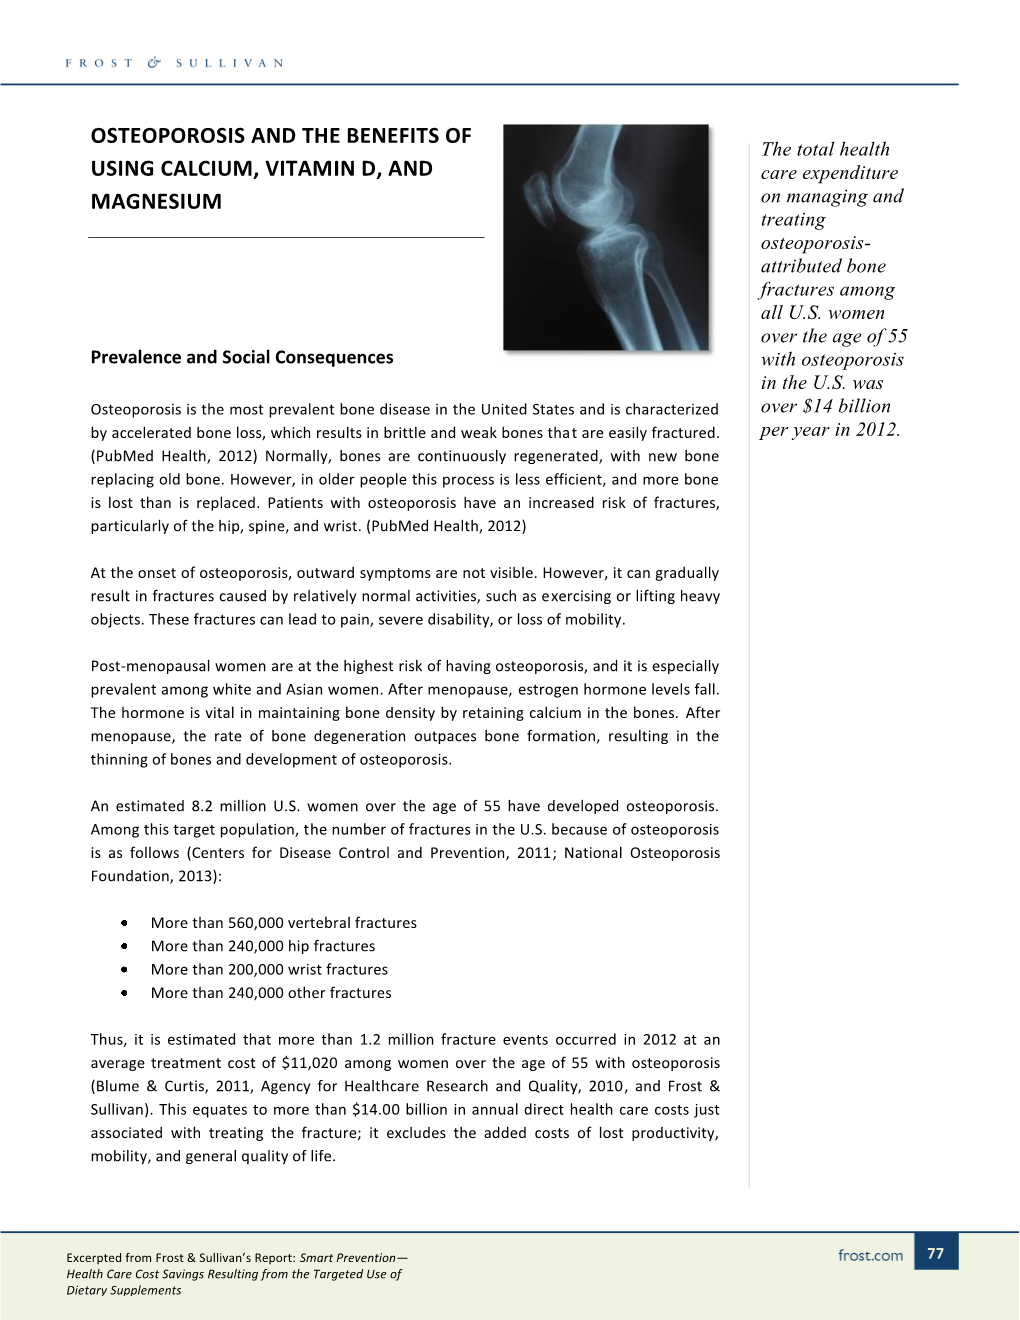 Osteoporosis with Calcium + Vitamin D, and Magnesium